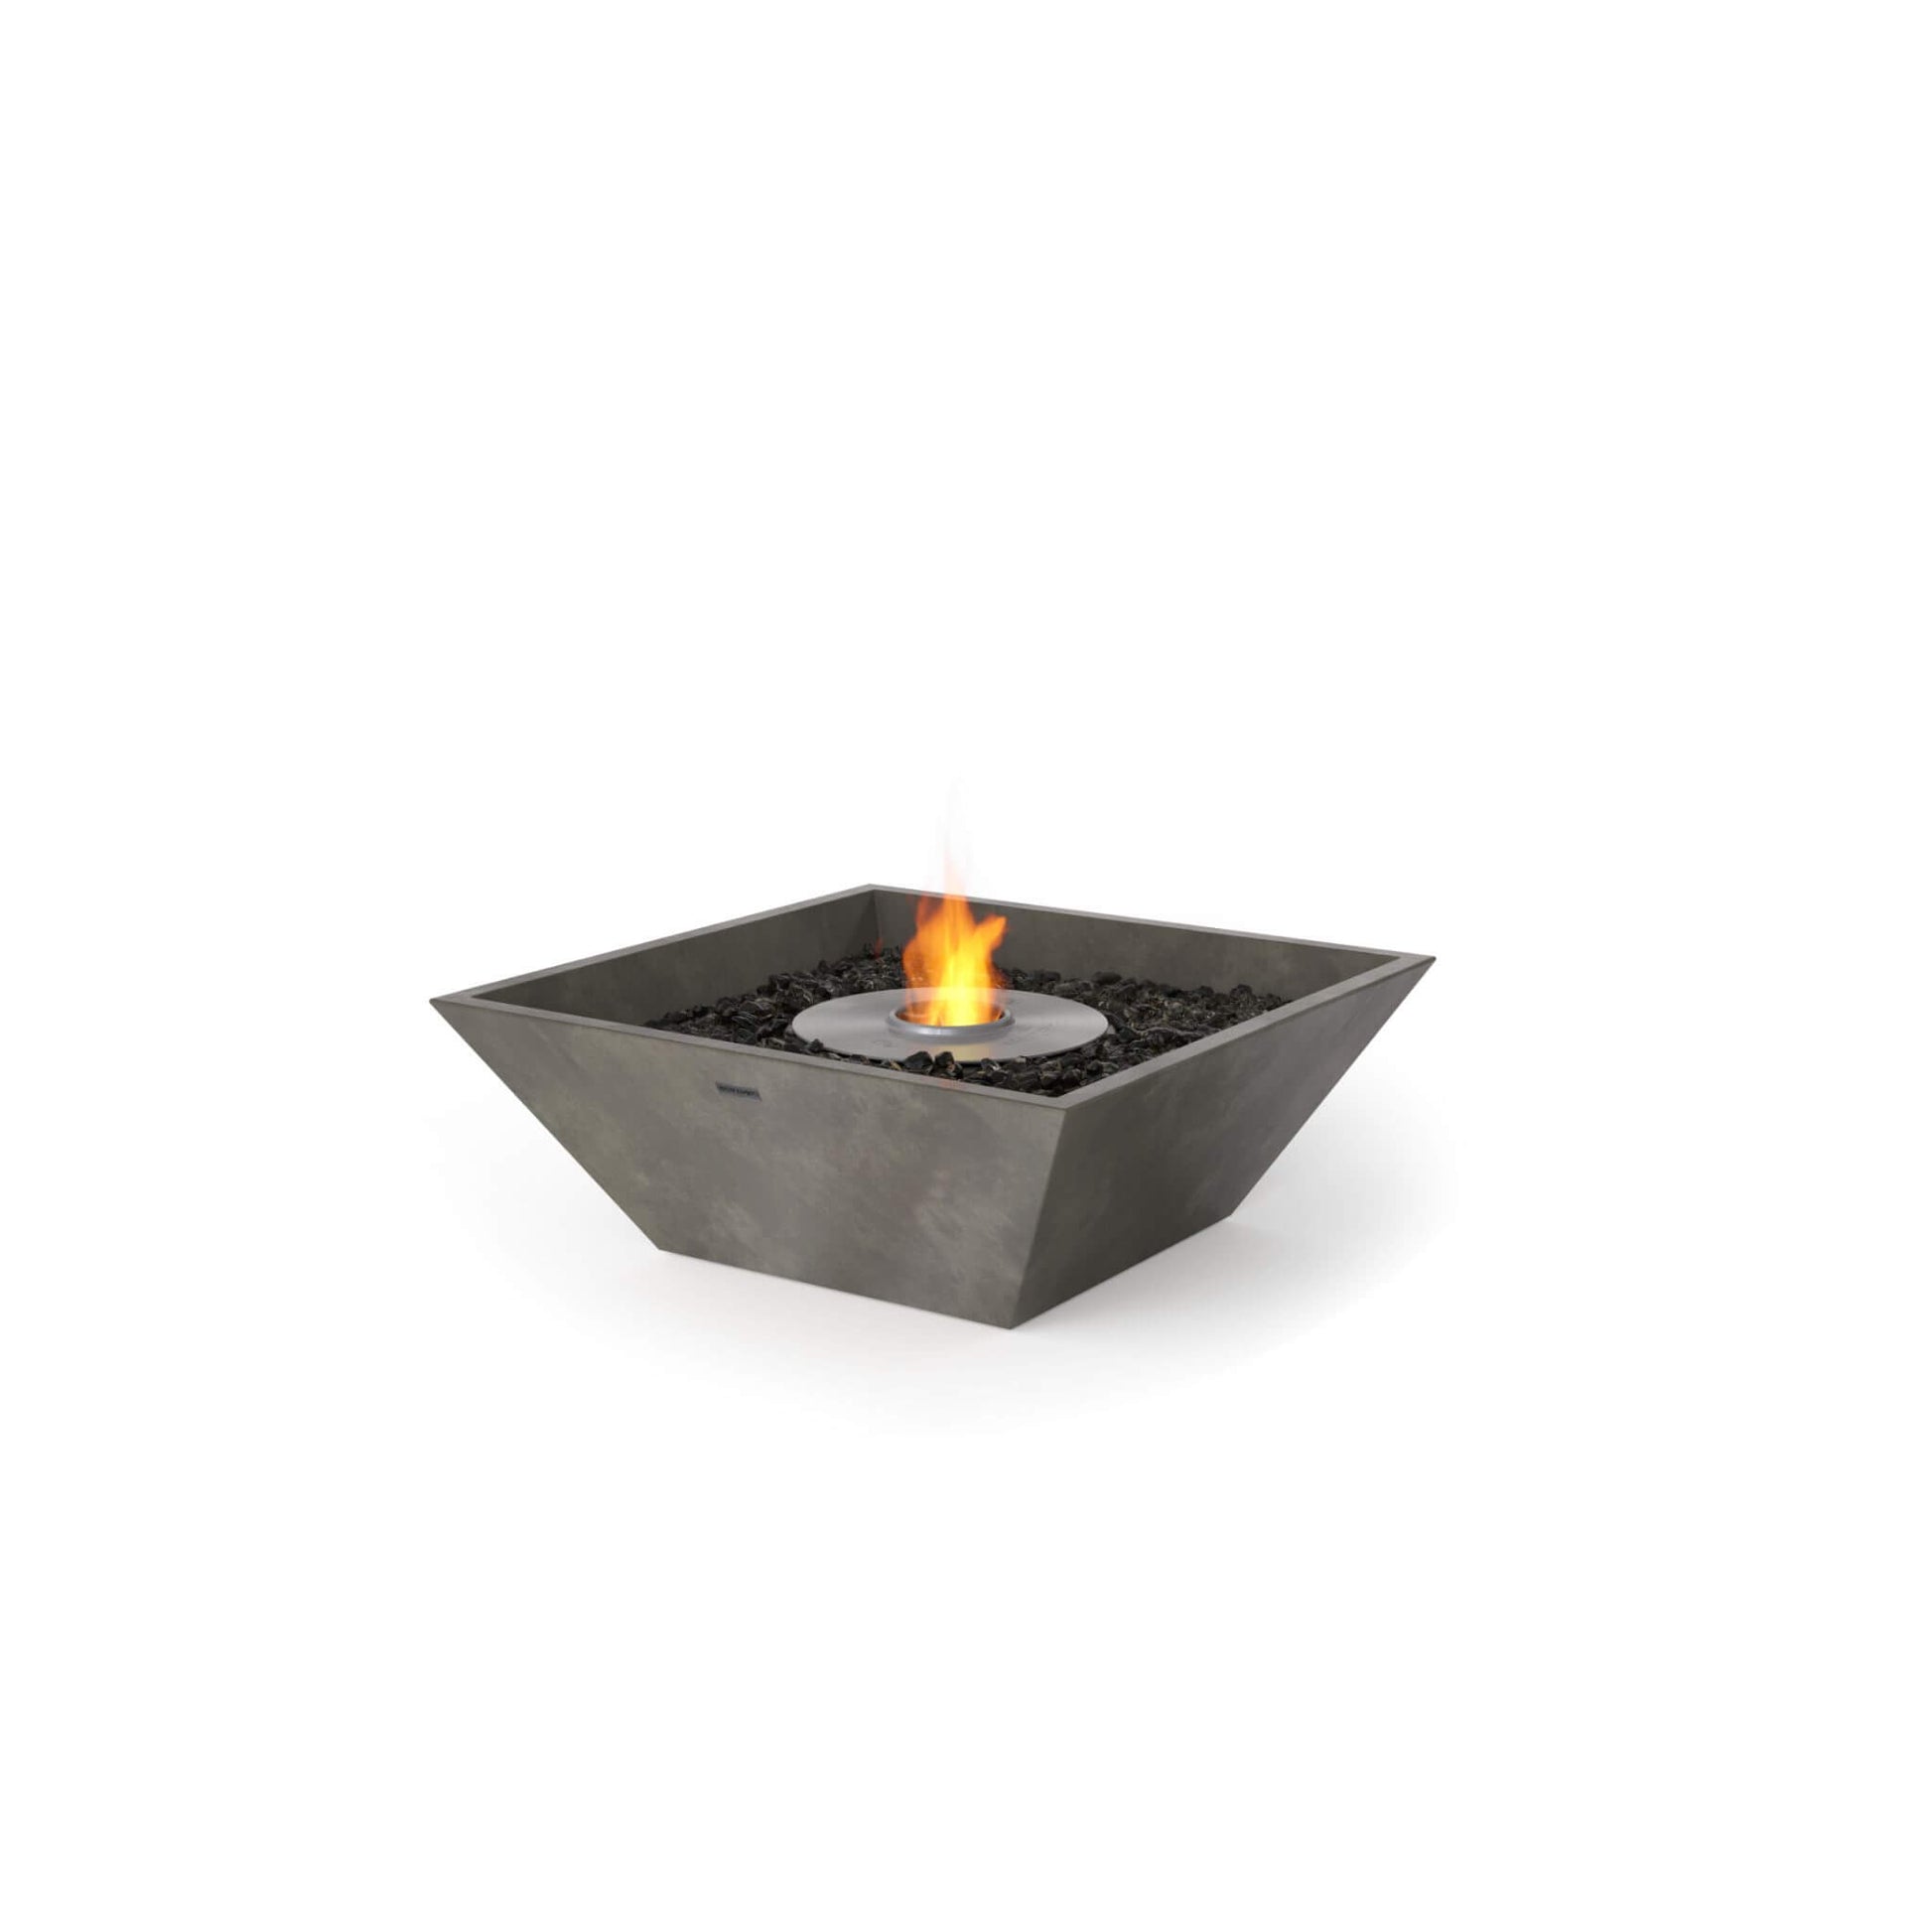 Ecosmart Fire Nova 600 bioethanol garden fire pit square bowl in concrete grey with stainless steel ethanol burner